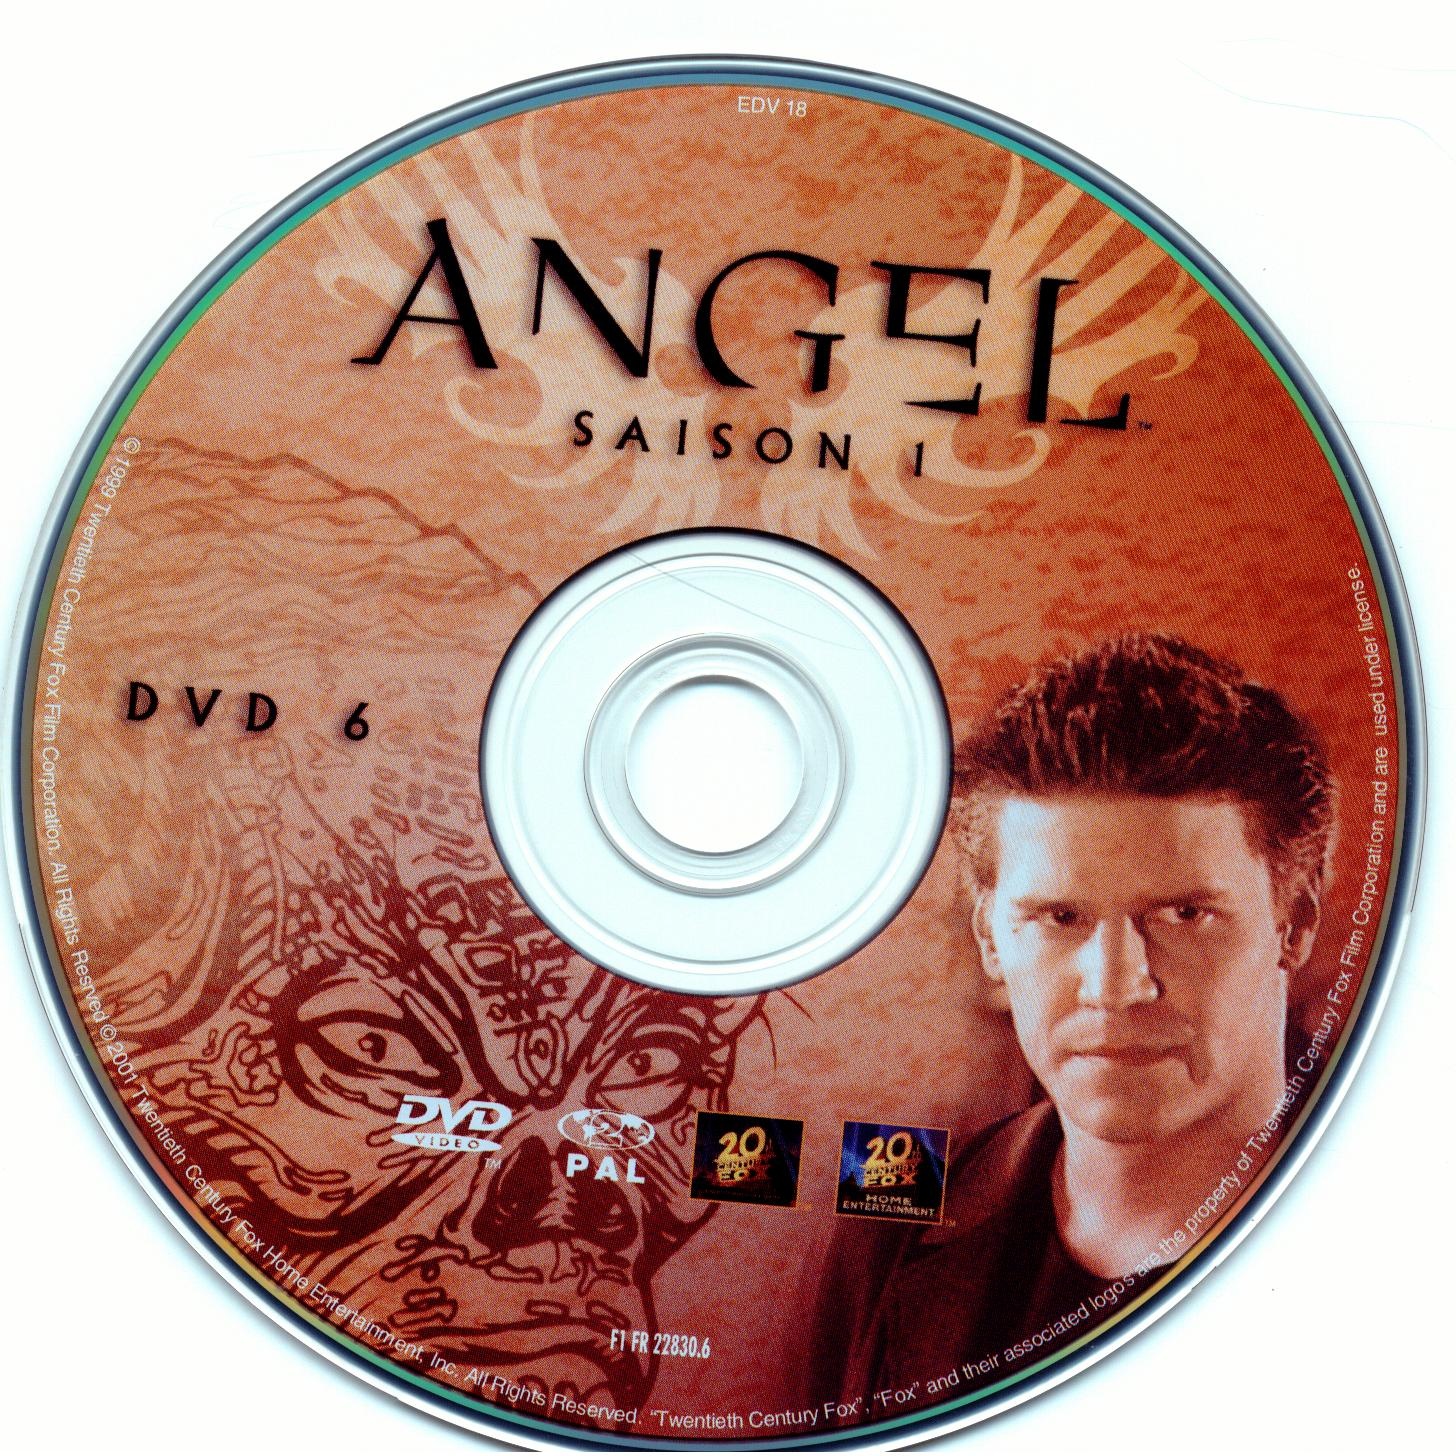 Angel Saison 1 dvd 6